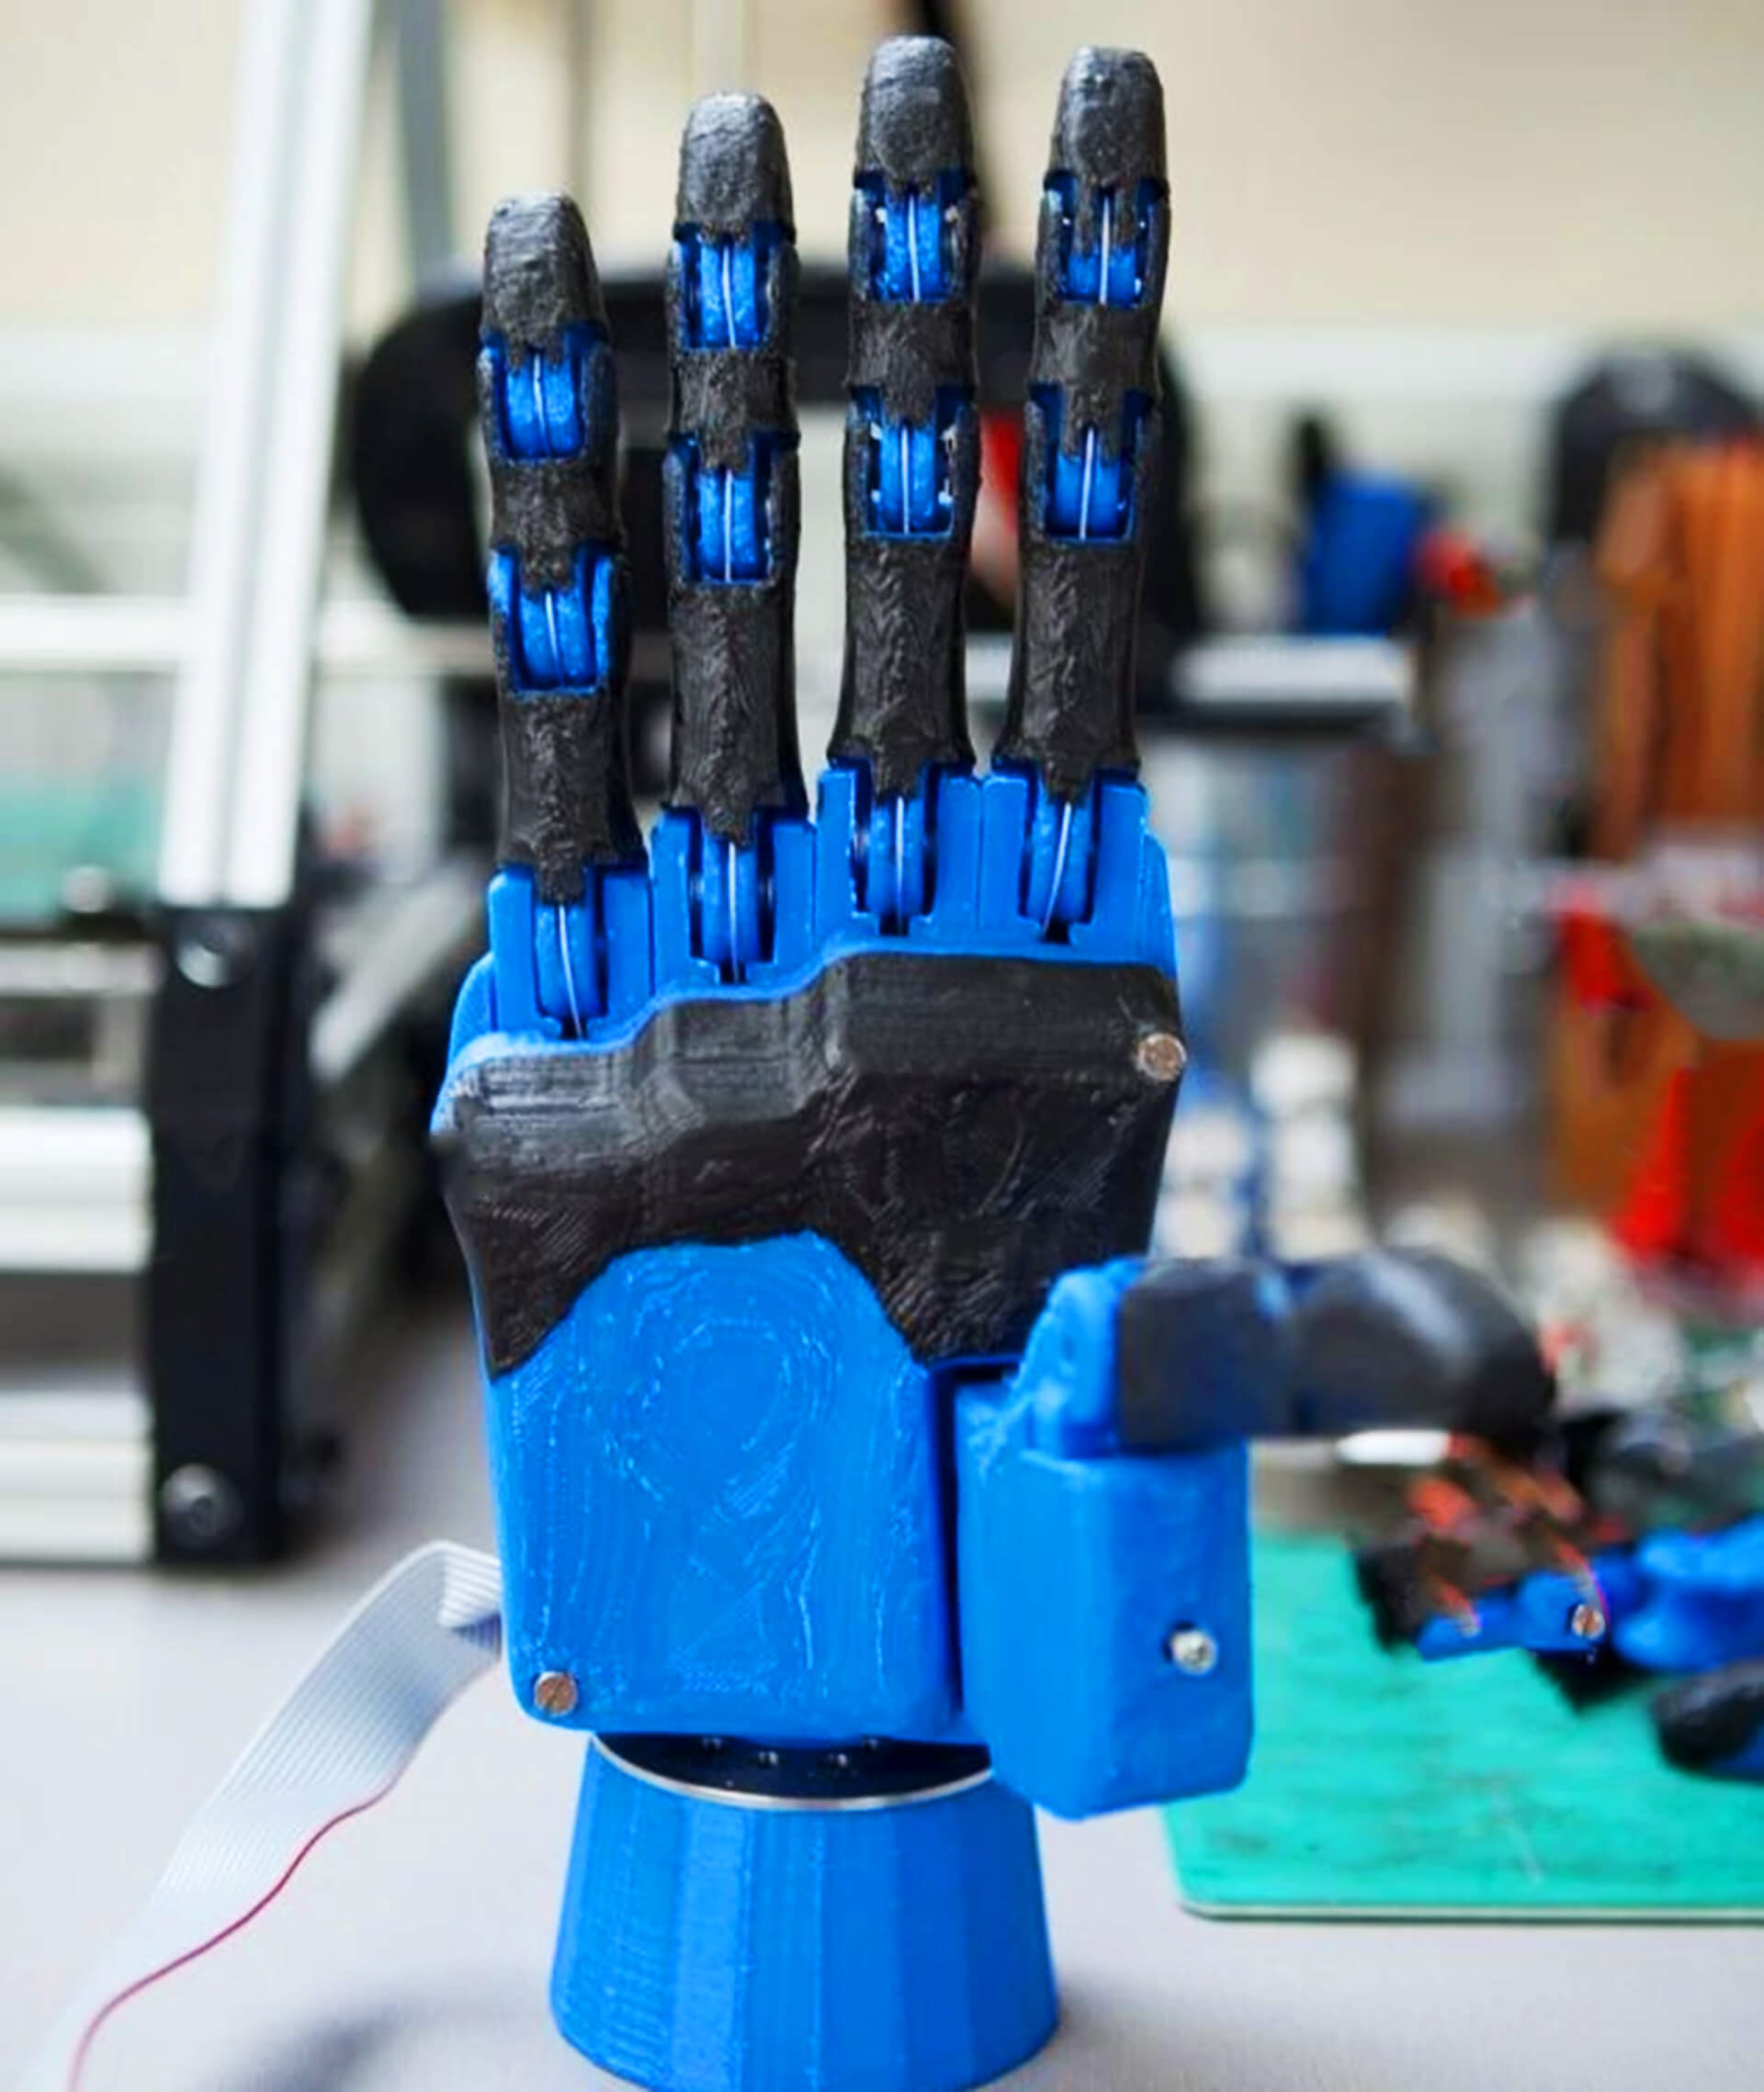 3D printed robotic hand